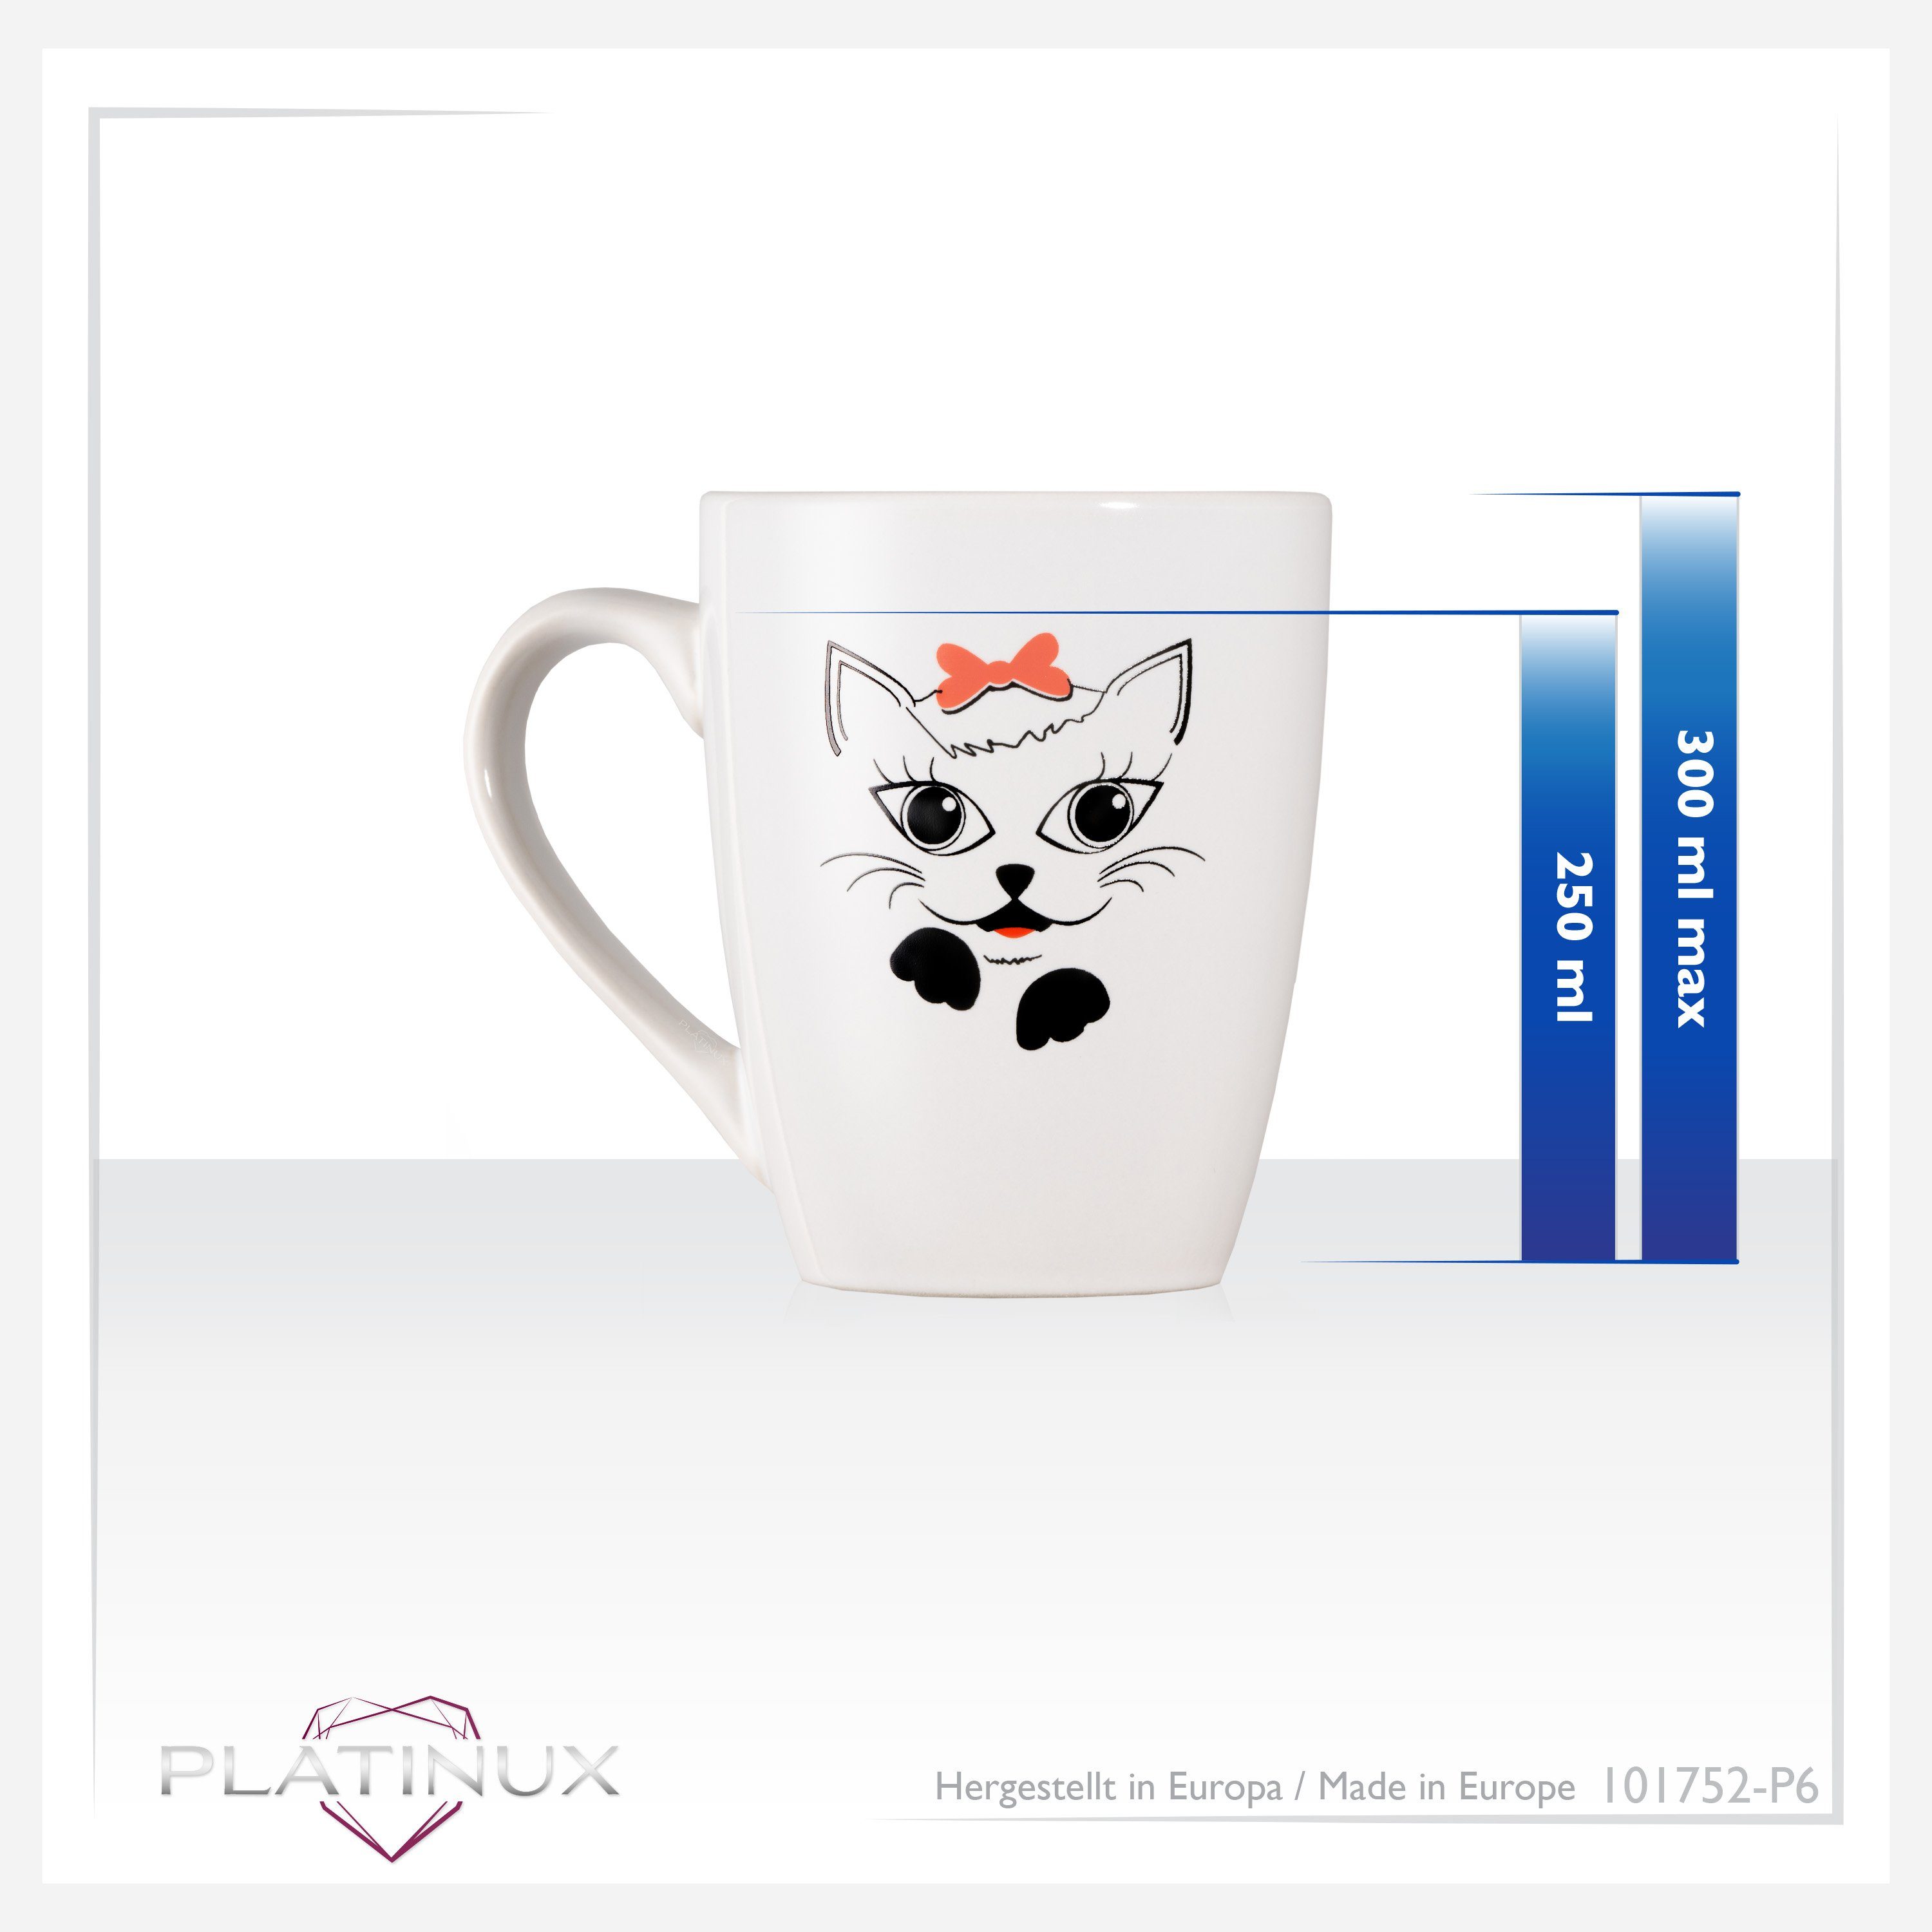 PLATINUX Tasse Katzen Kaffeetassen, Keramik, 250ml Set Teetasse Kaffeebecher mit Katzen-Motiven Tasse Teebecher